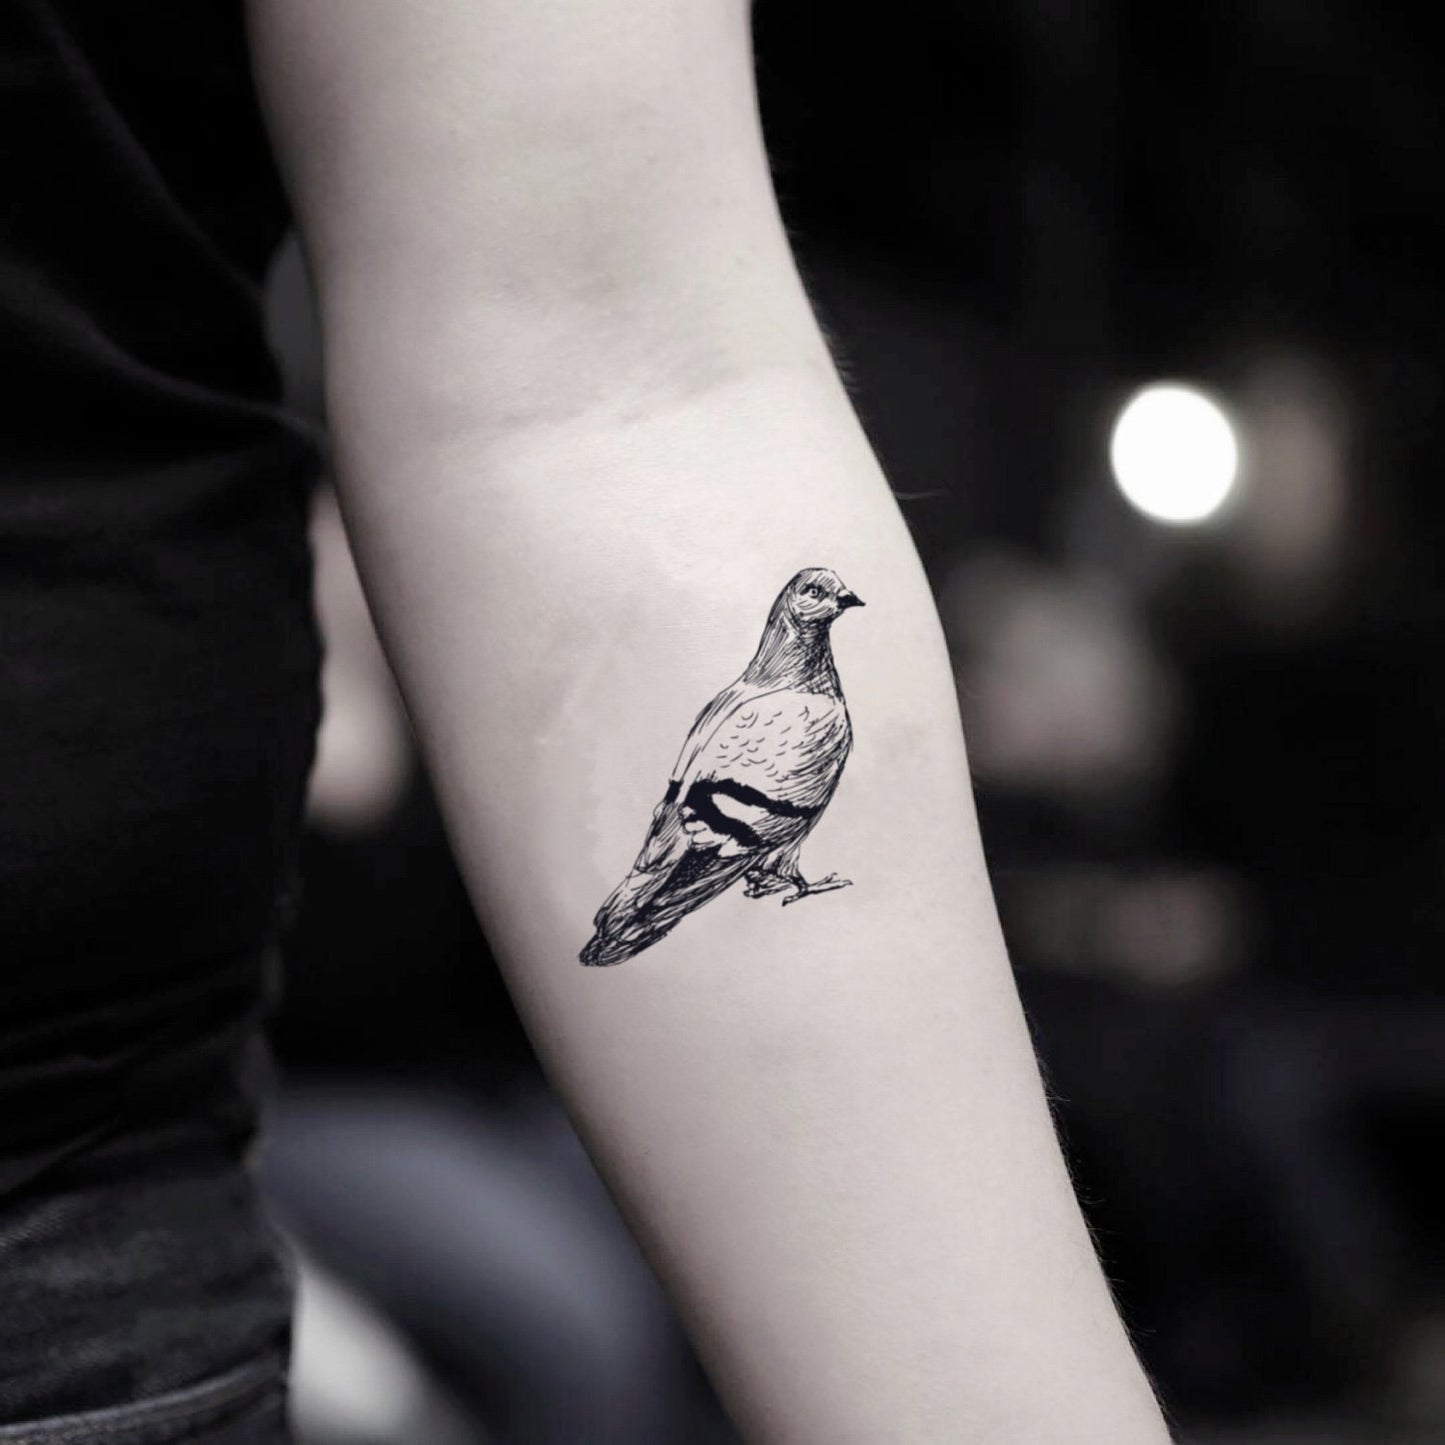 fake small pigeon animal temporary tattoo sticker design idea on inner arm